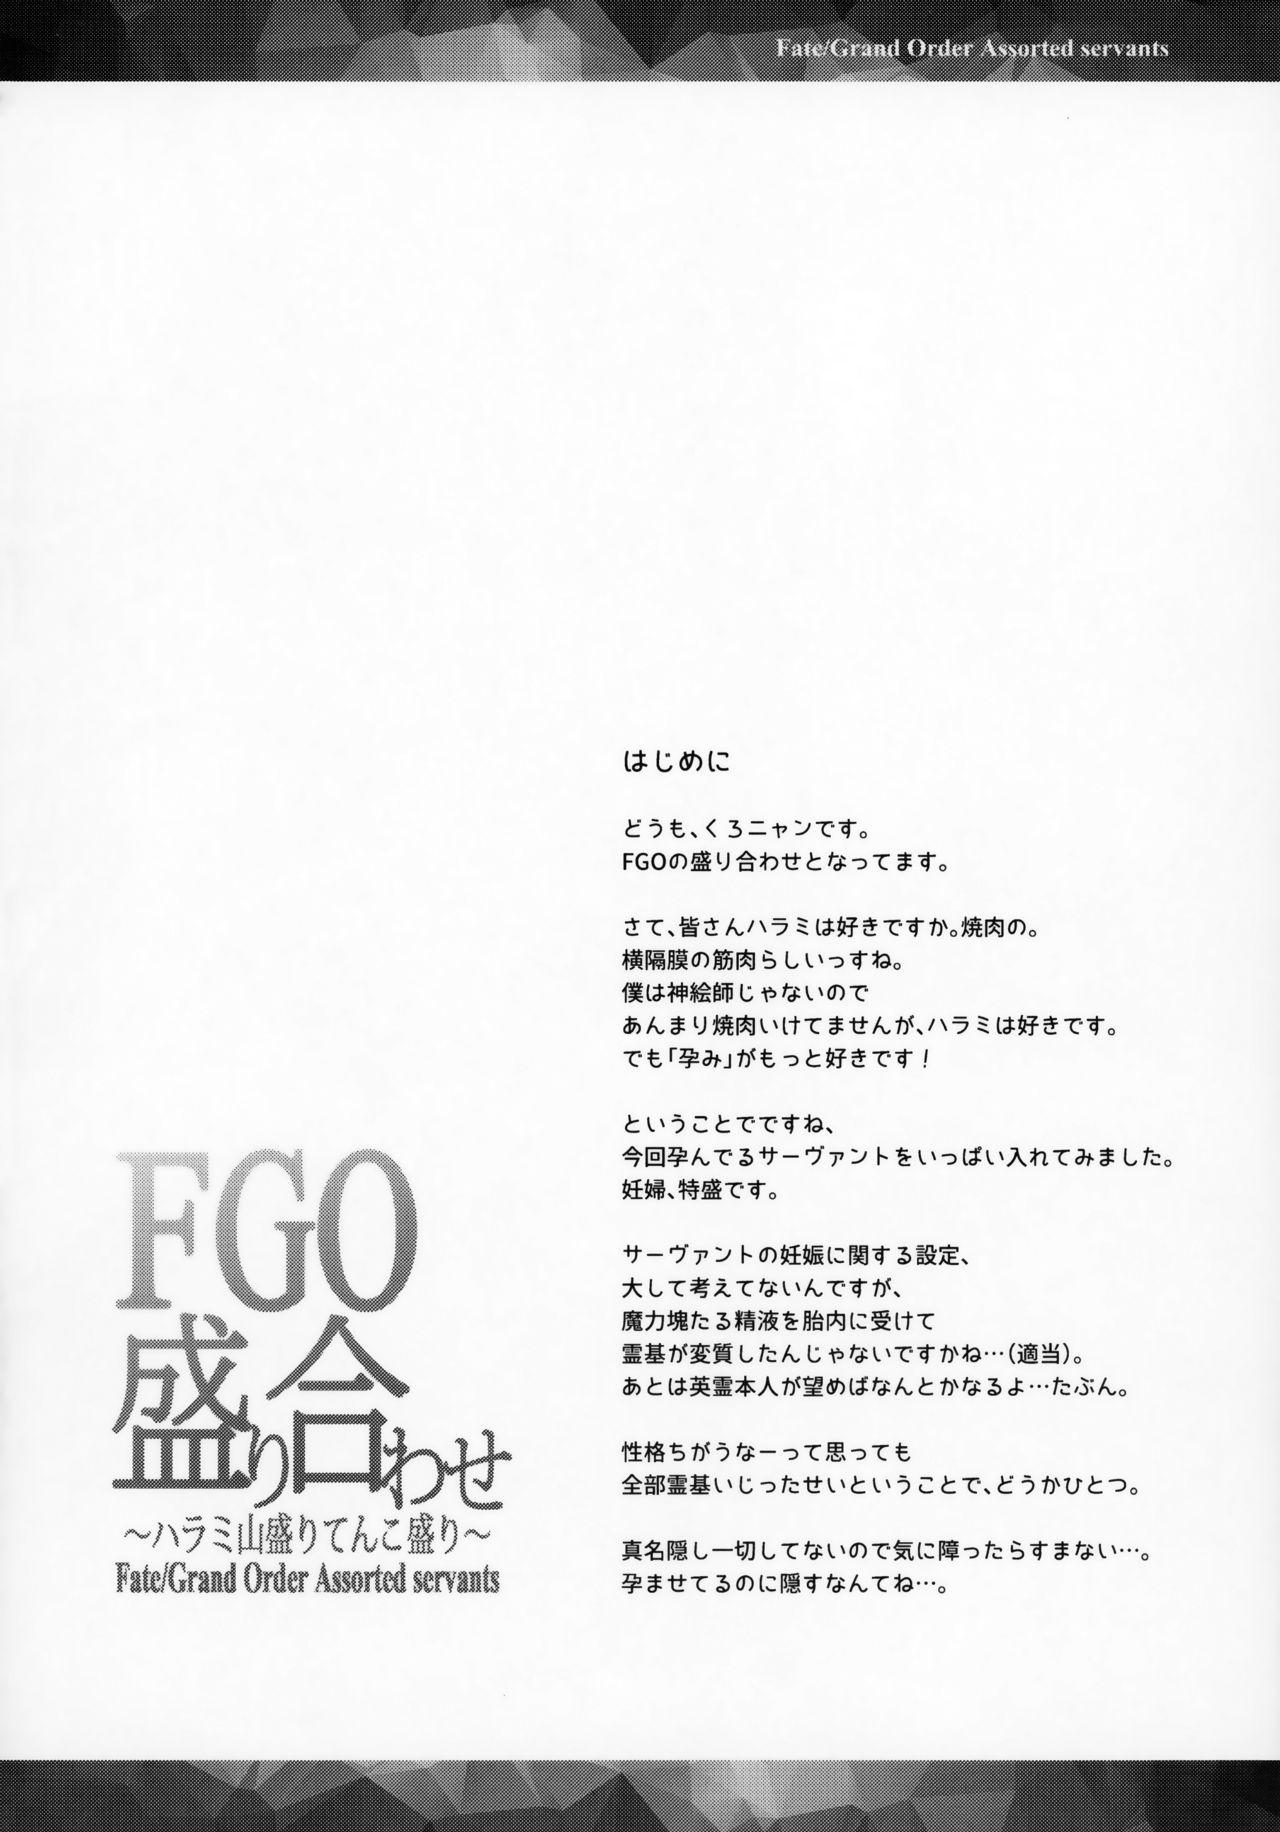 FGO Moriawase 2